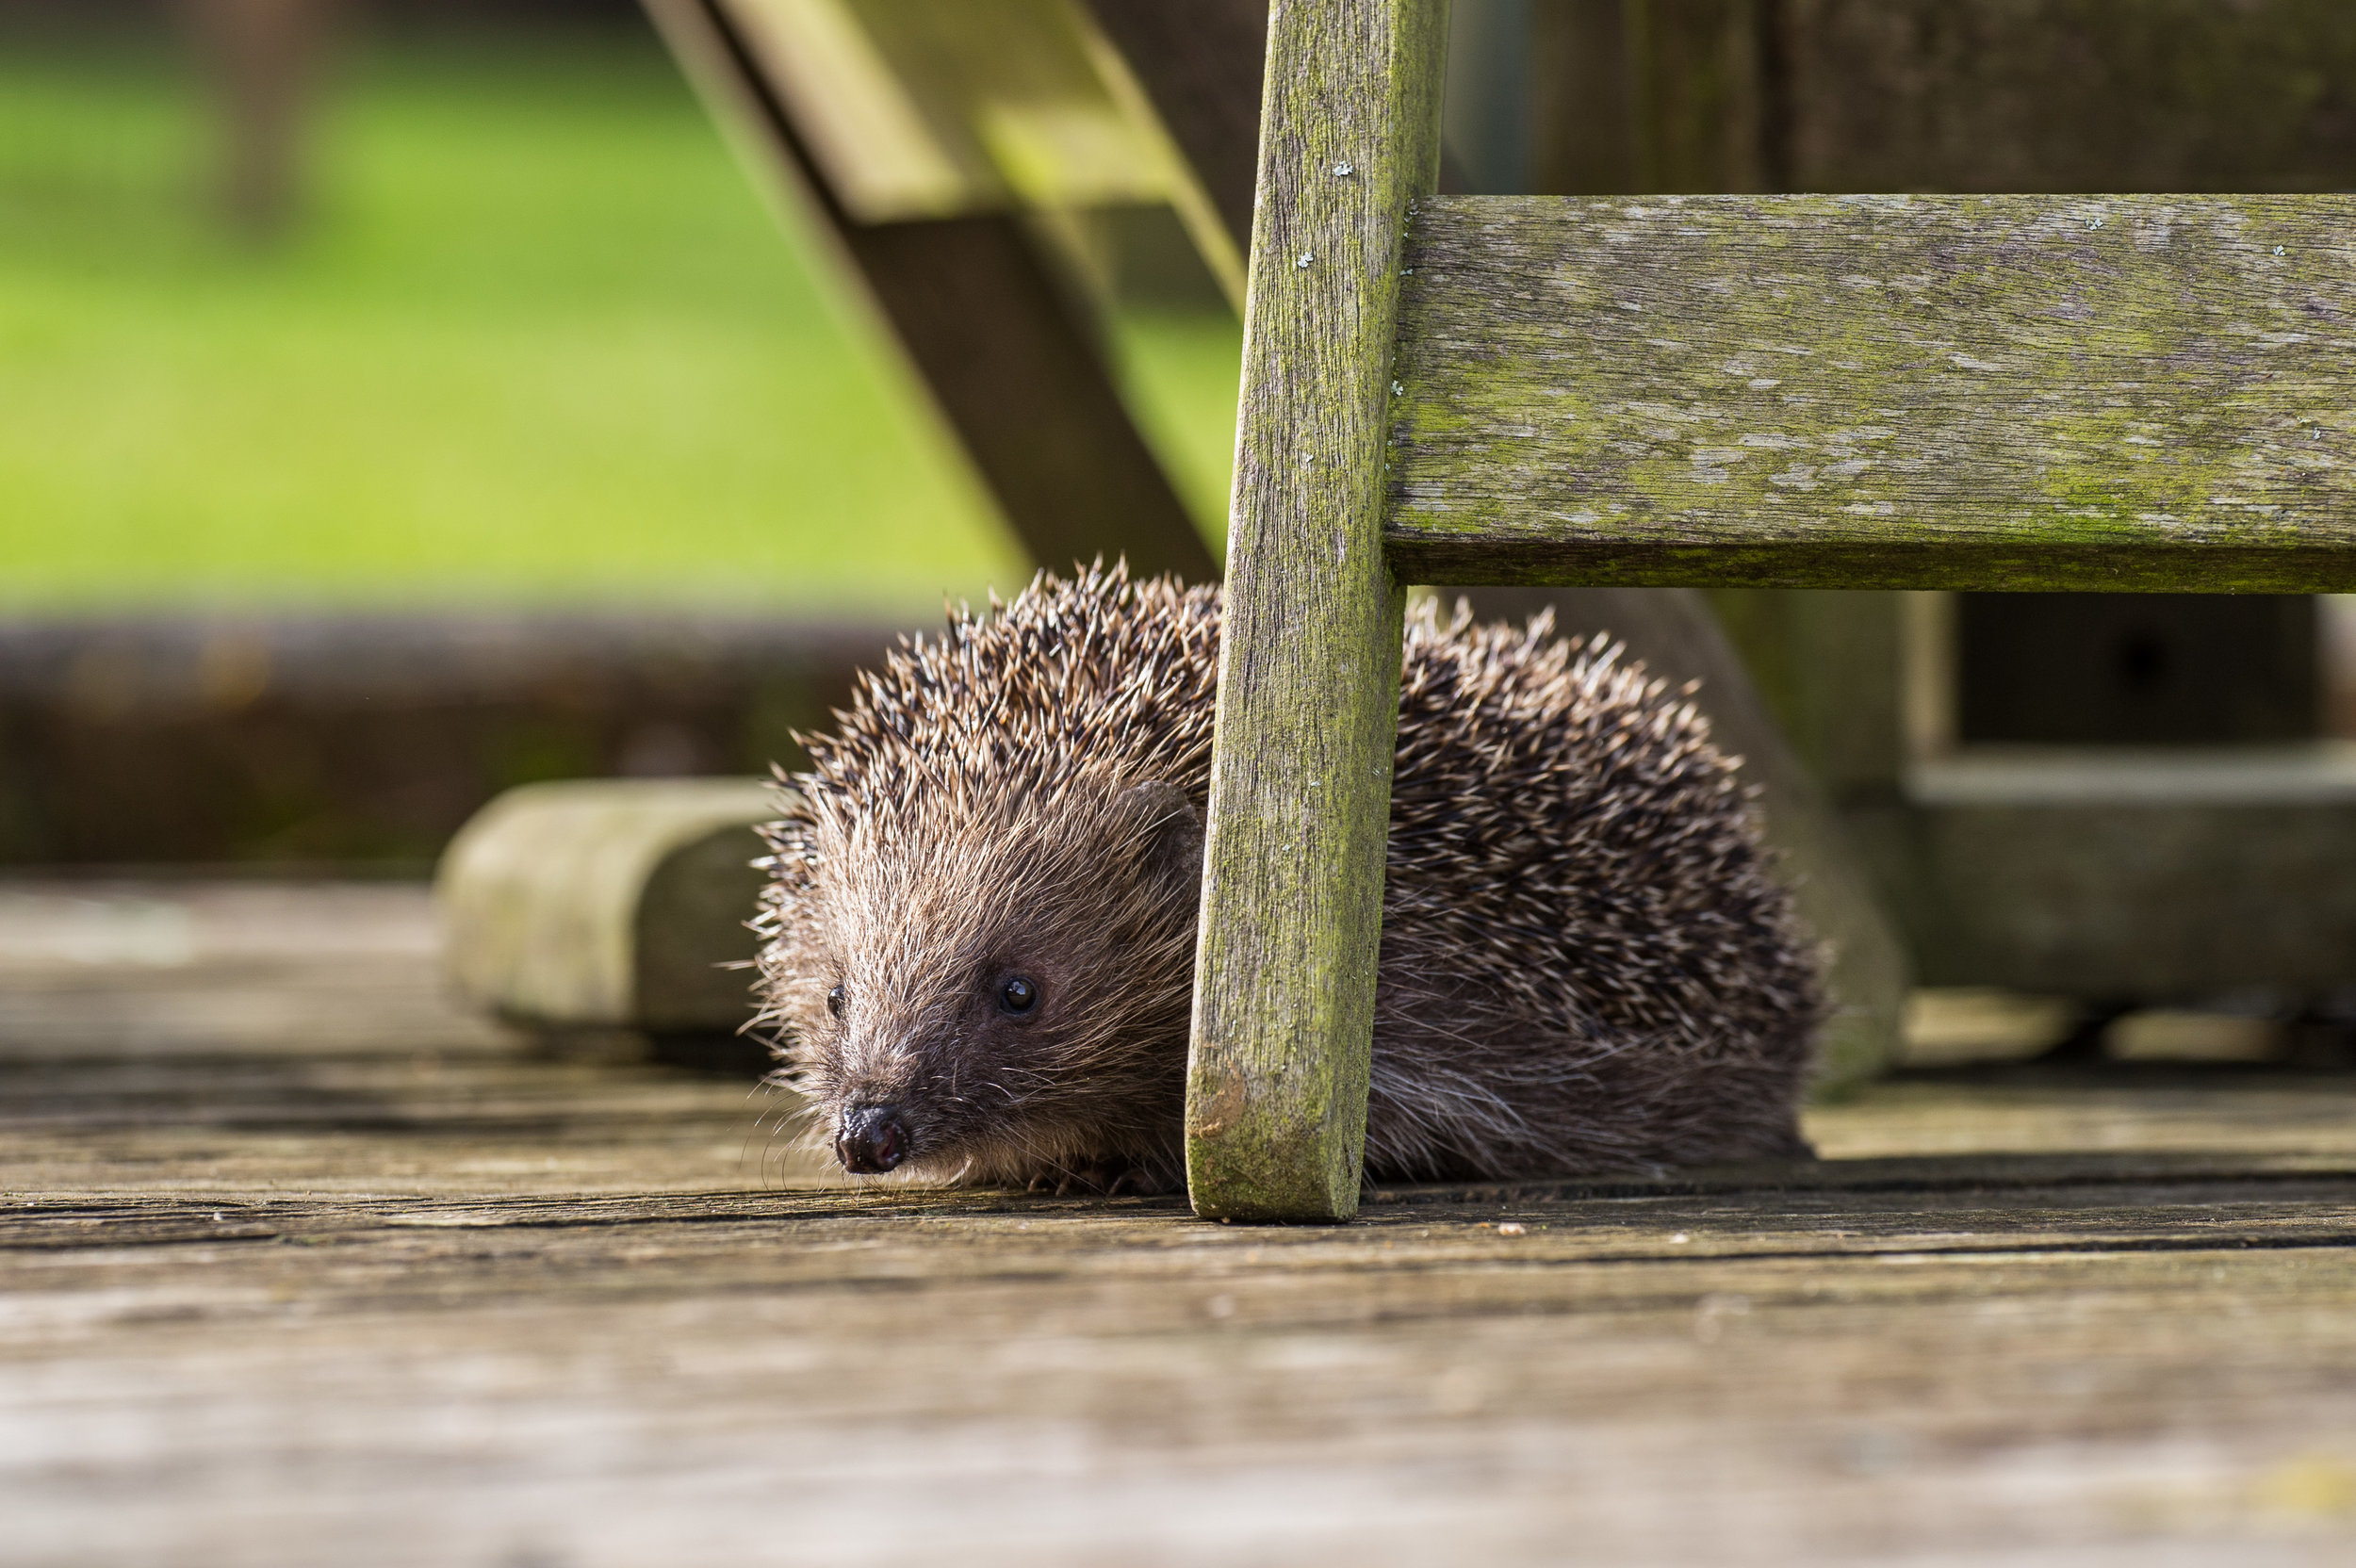 Is it cruel to keep hedgehogs as pets?